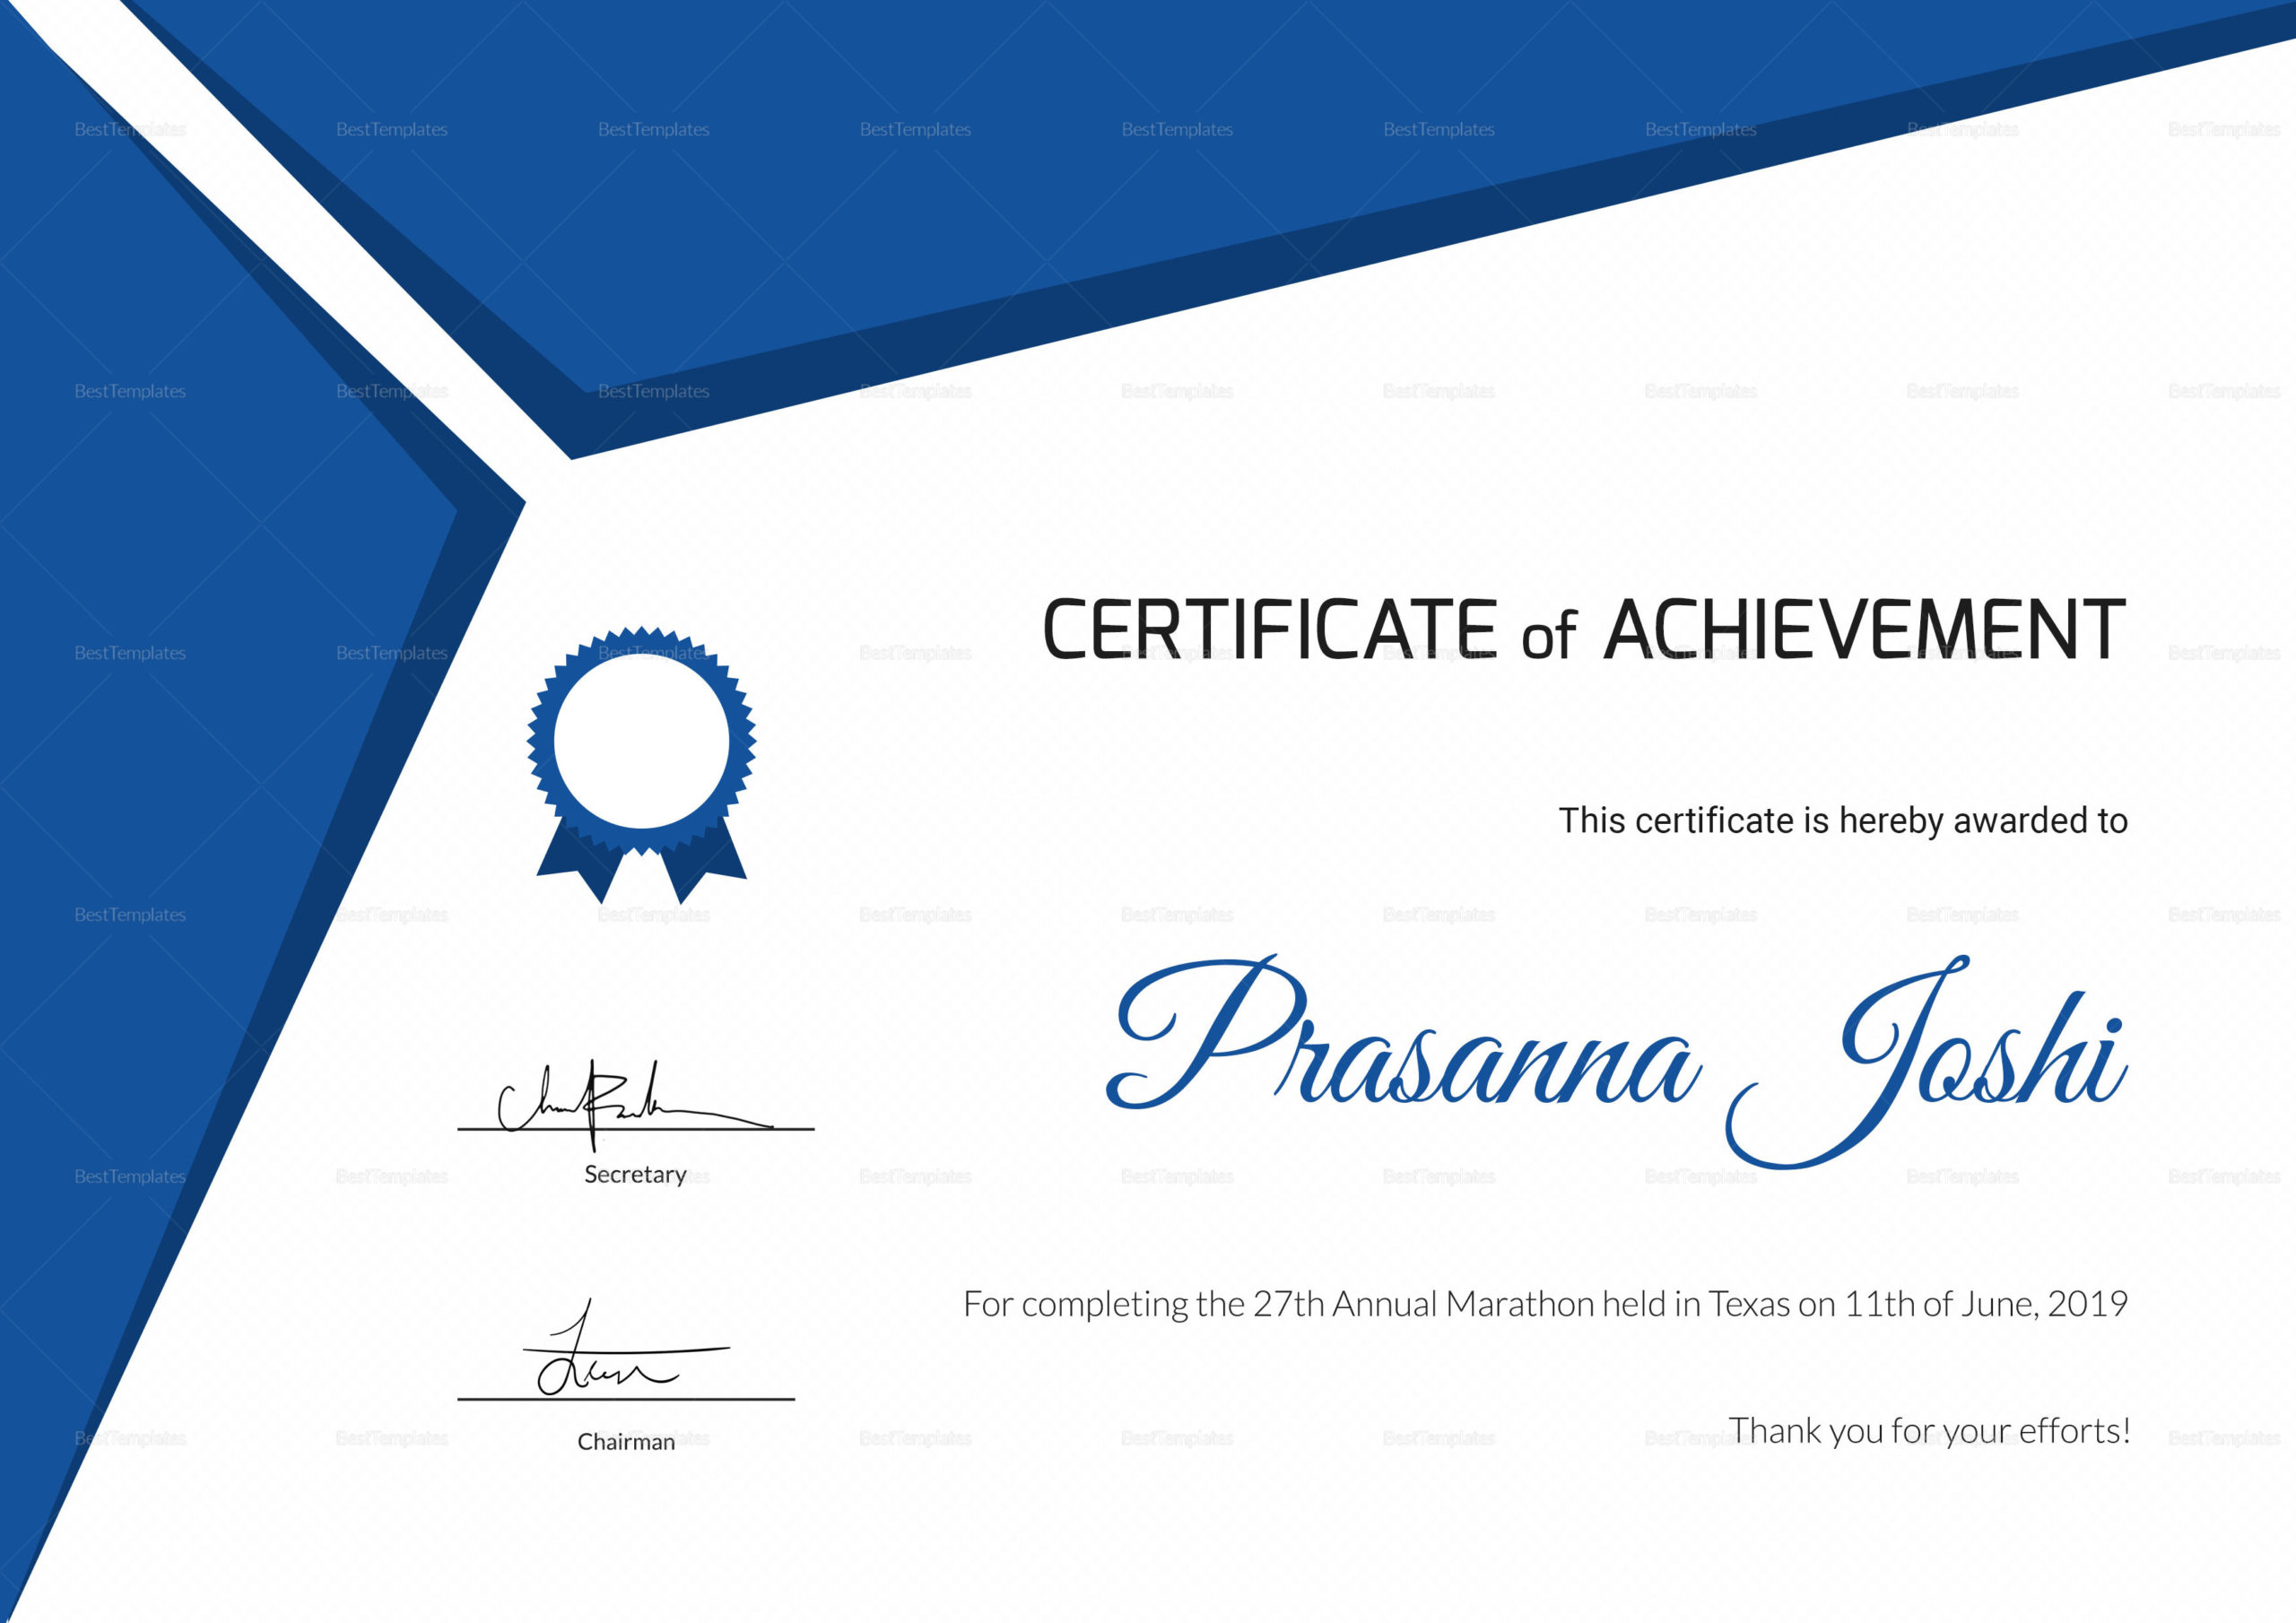 Certificate Of Marathon Achievement Design Template In Psd In 5K Race Certificate Templates